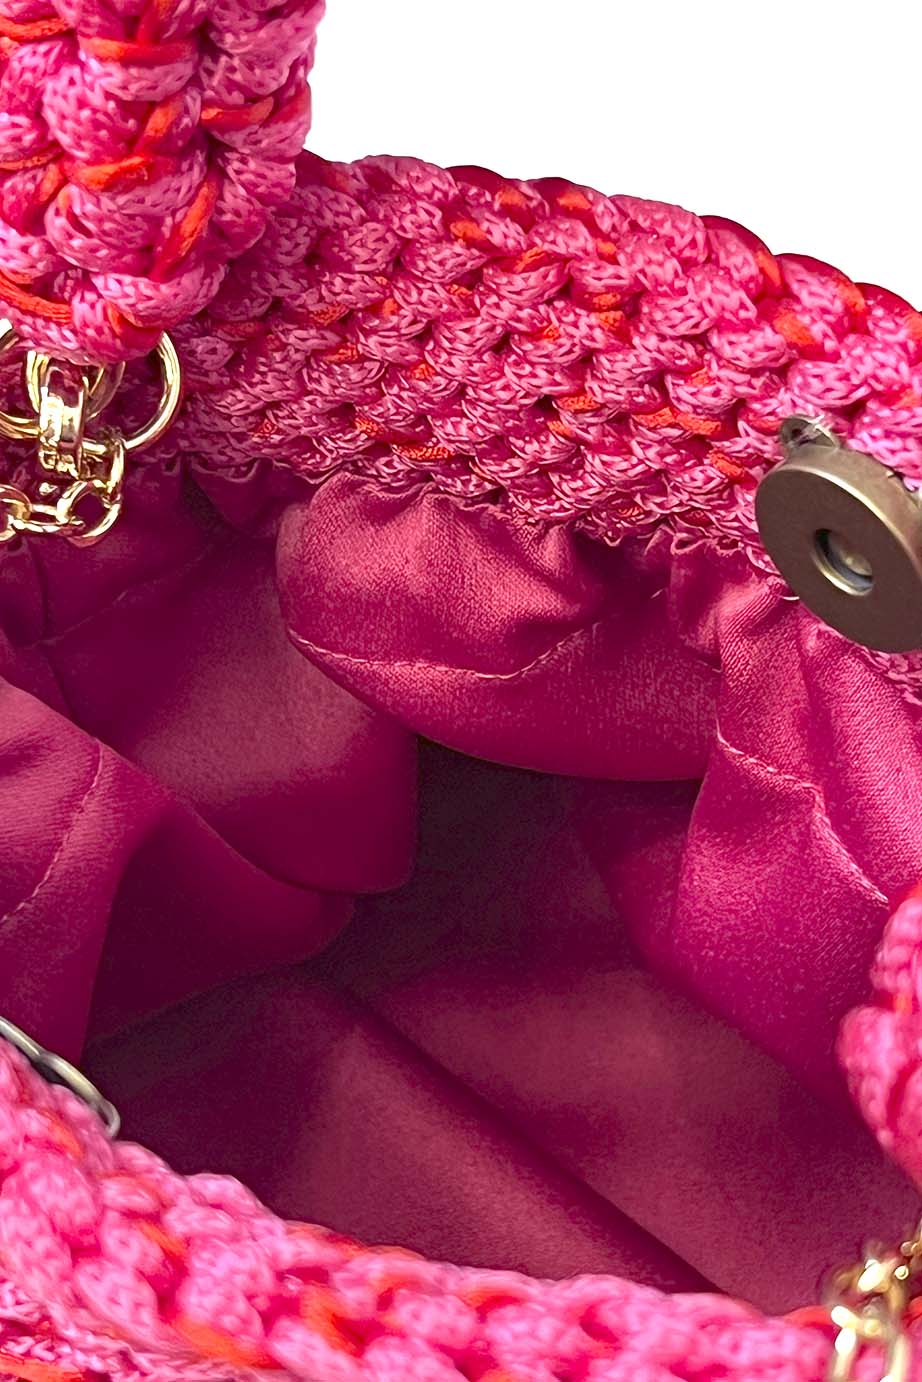 Bolsa Clutch Crochê 2 Alças Pink/Vermelha